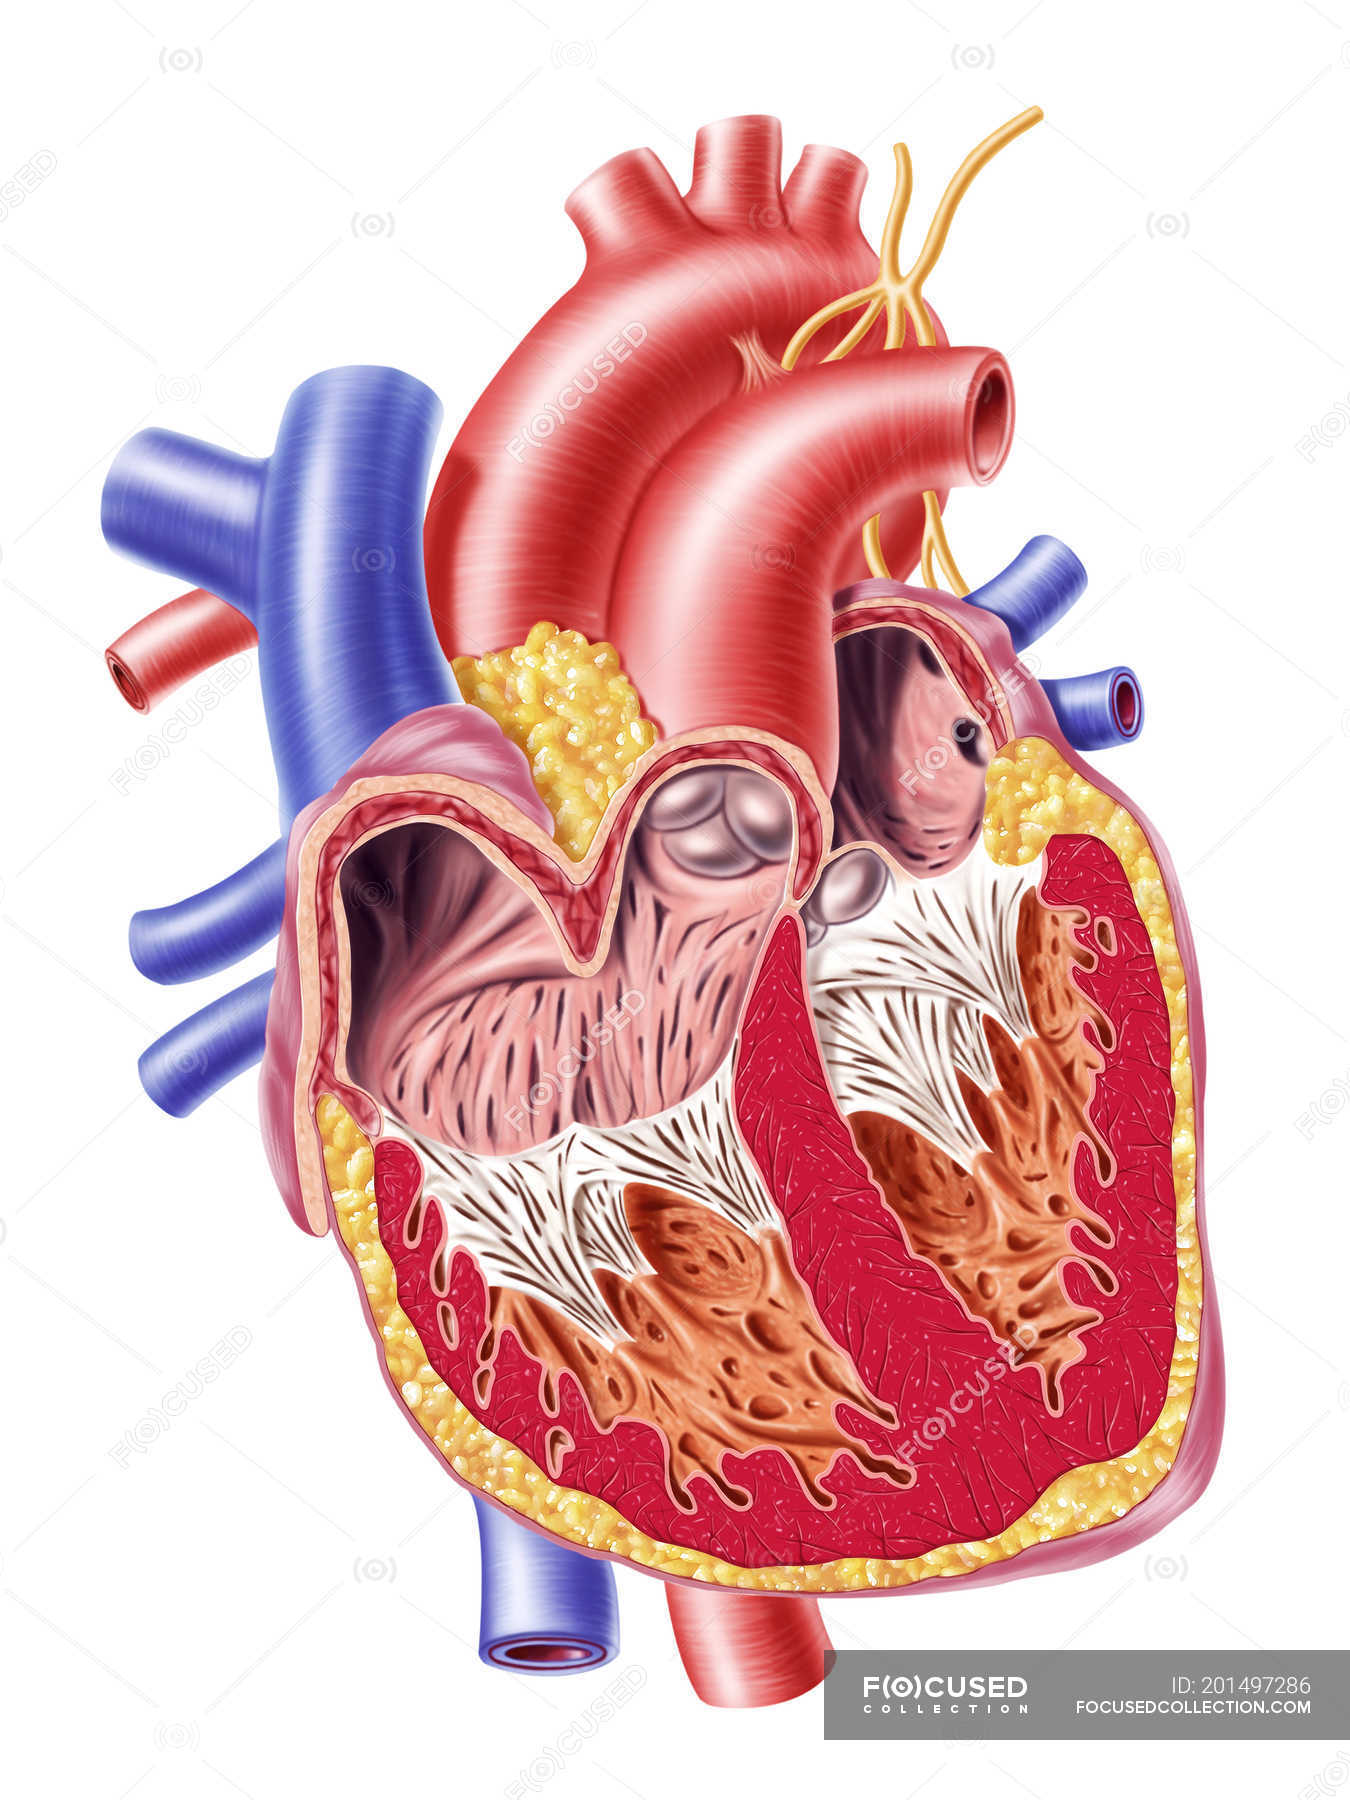 interiorsdesignny: Internal Structure Of Human Heart Pdf